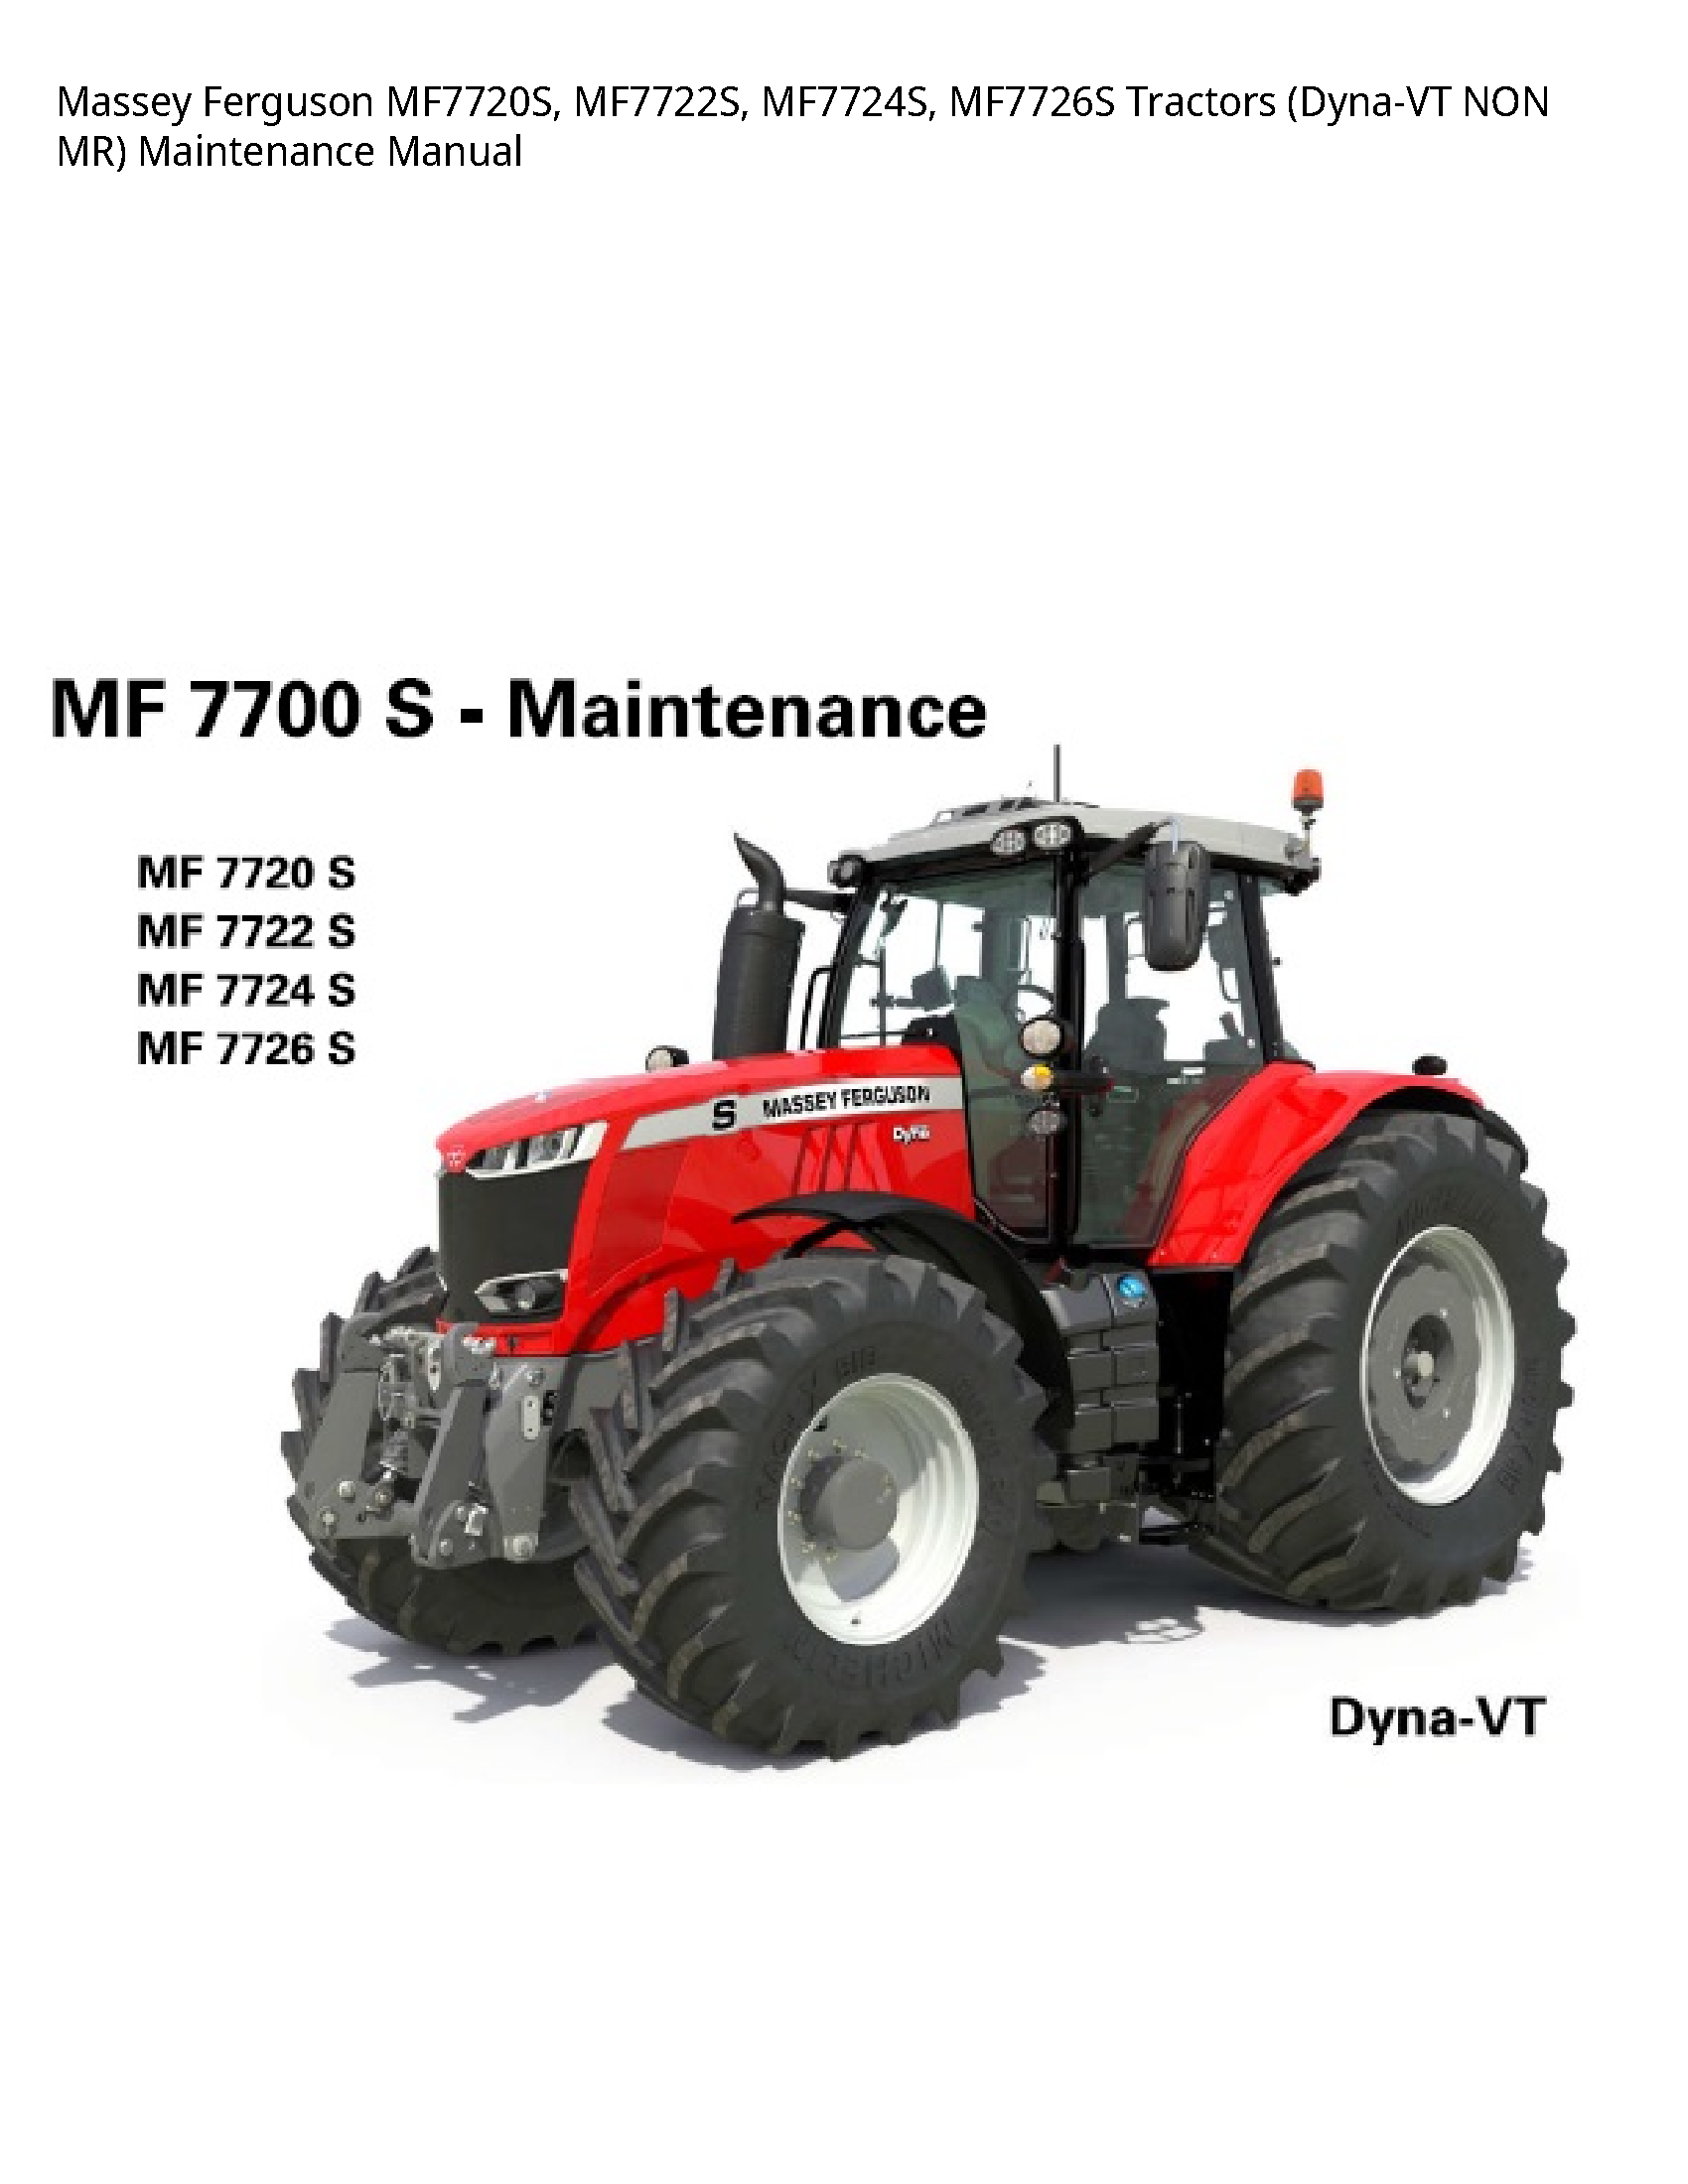 Massey Ferguson MF7720S Tractors (Dyna-VT NON MR) Maintenance manual